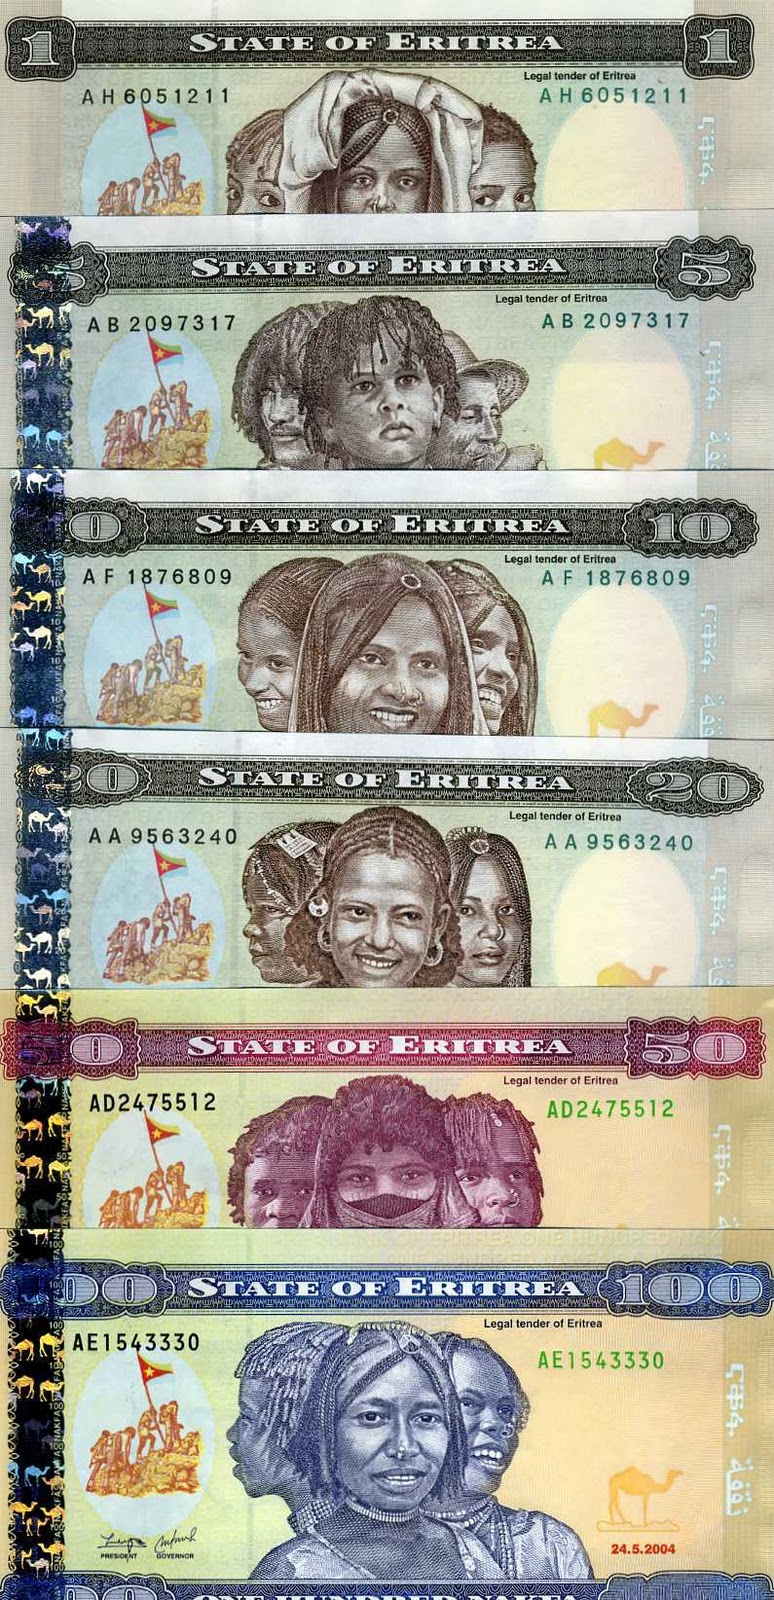 Ethiopian Currency